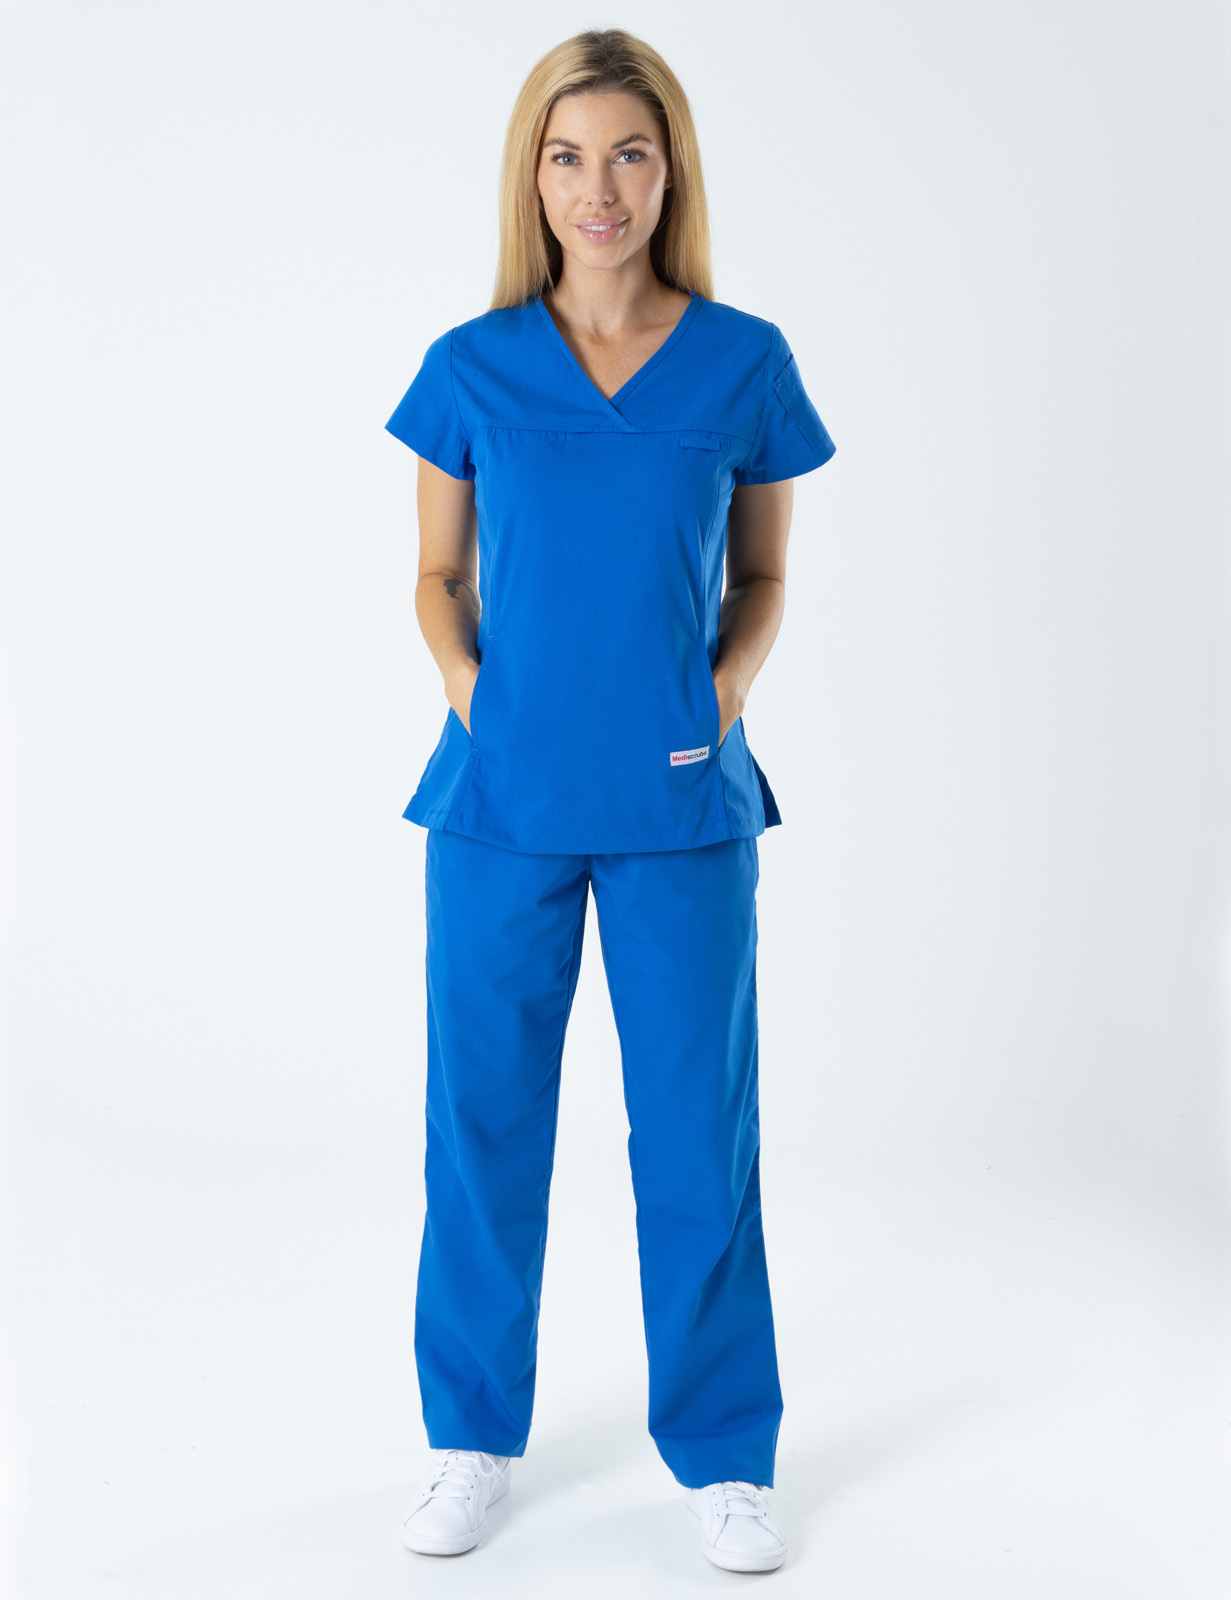 Royal Hobart Hospital Emergency Department Doctor Uniform Set Bundle (Women's Fit Solid Top and Cargo Pants in Royal incl Logo)